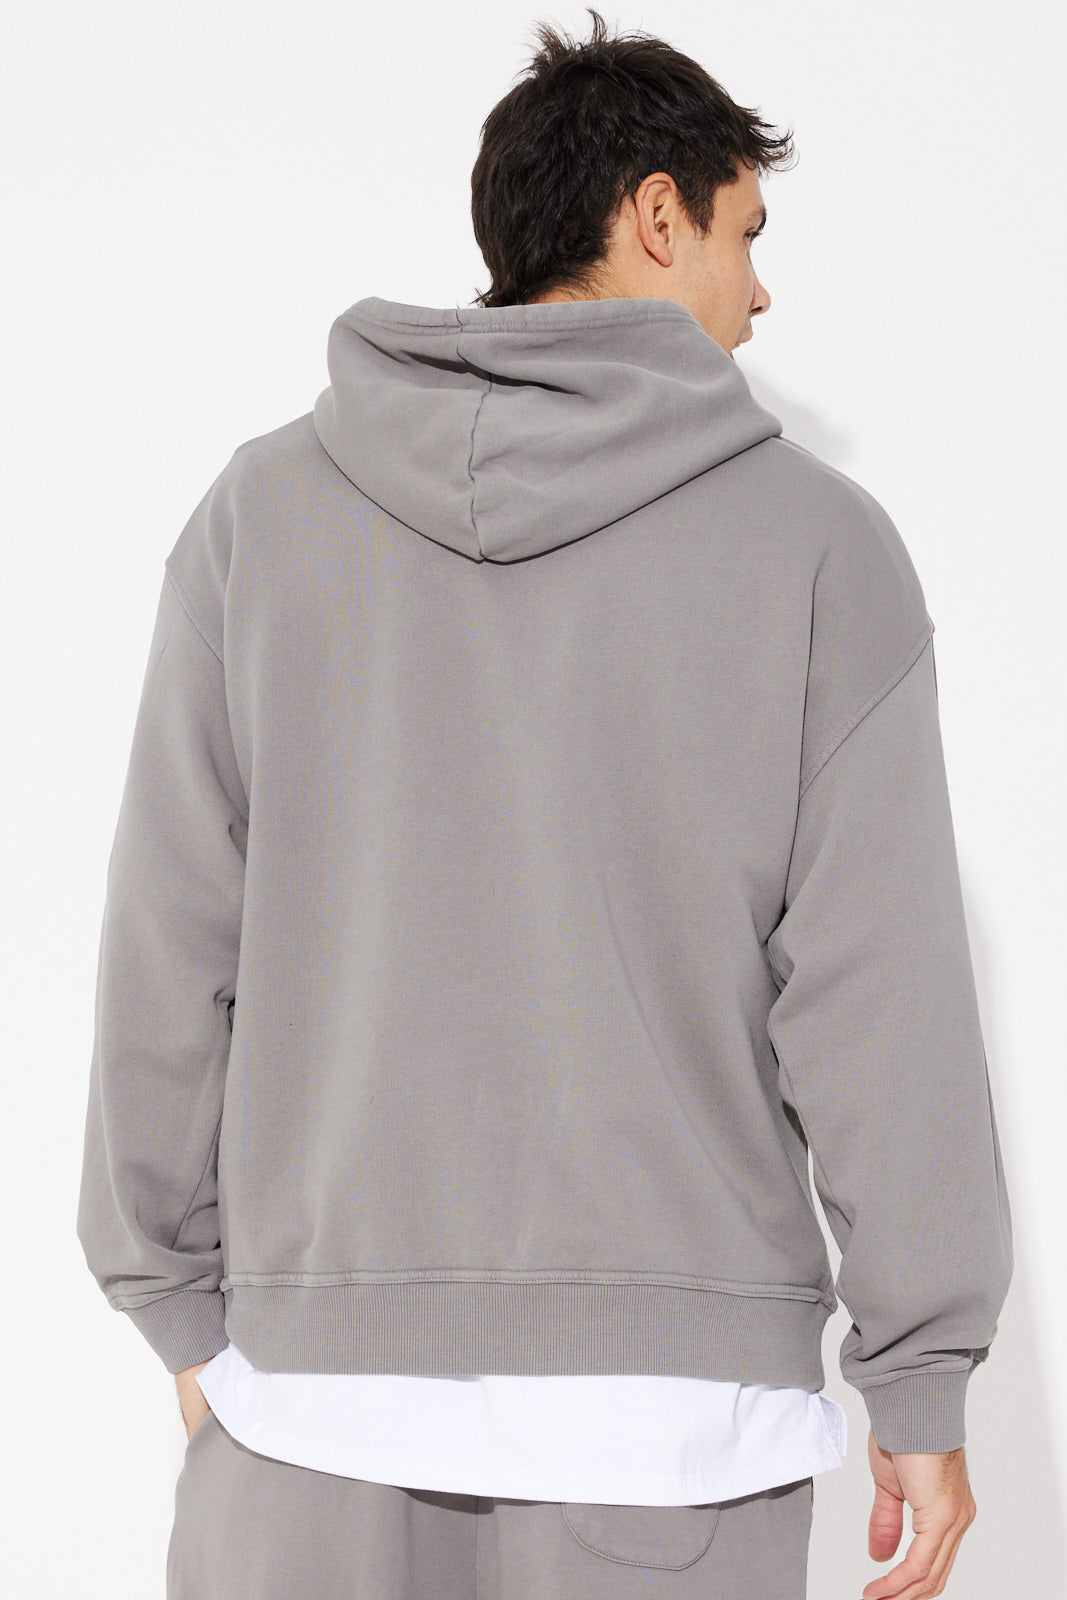 NTH Studios Drop Sleeve Sweater Charcoal - SALE